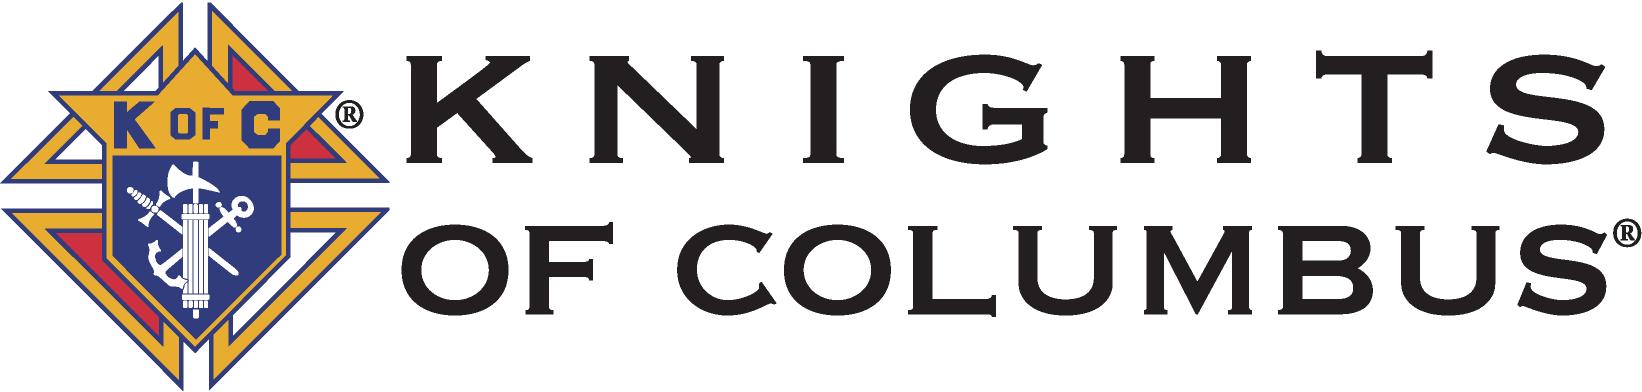 Knights Of Columbus Logo Png